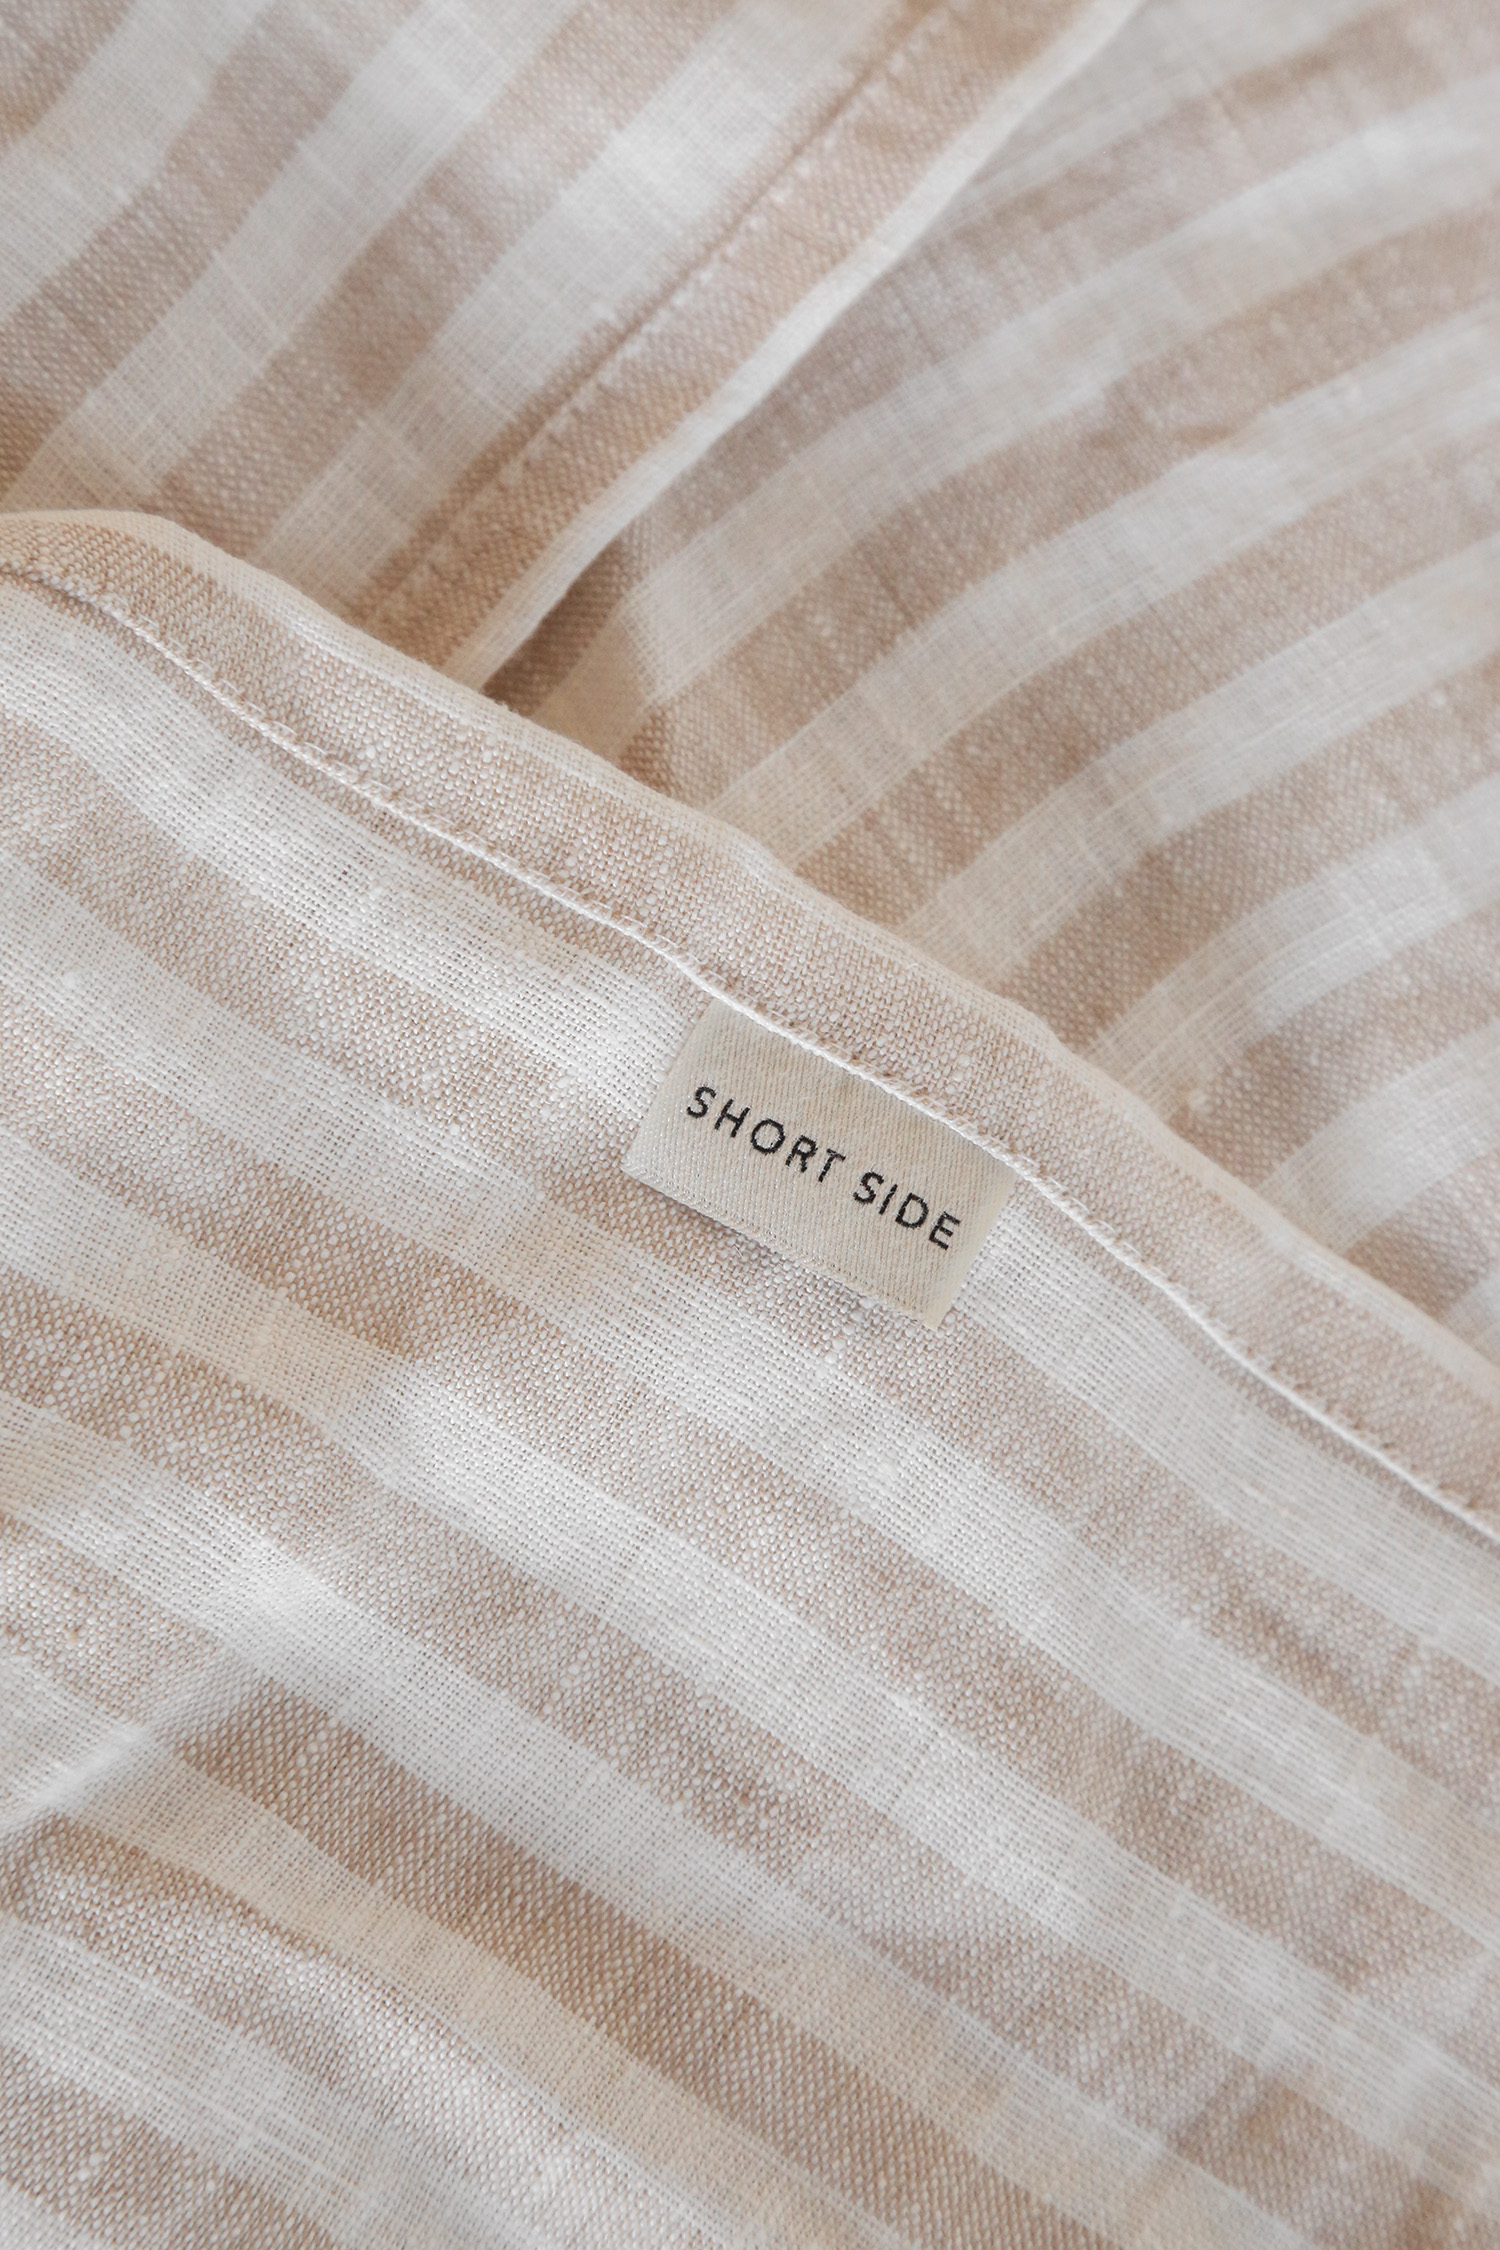 Short side tab on Linen bedding